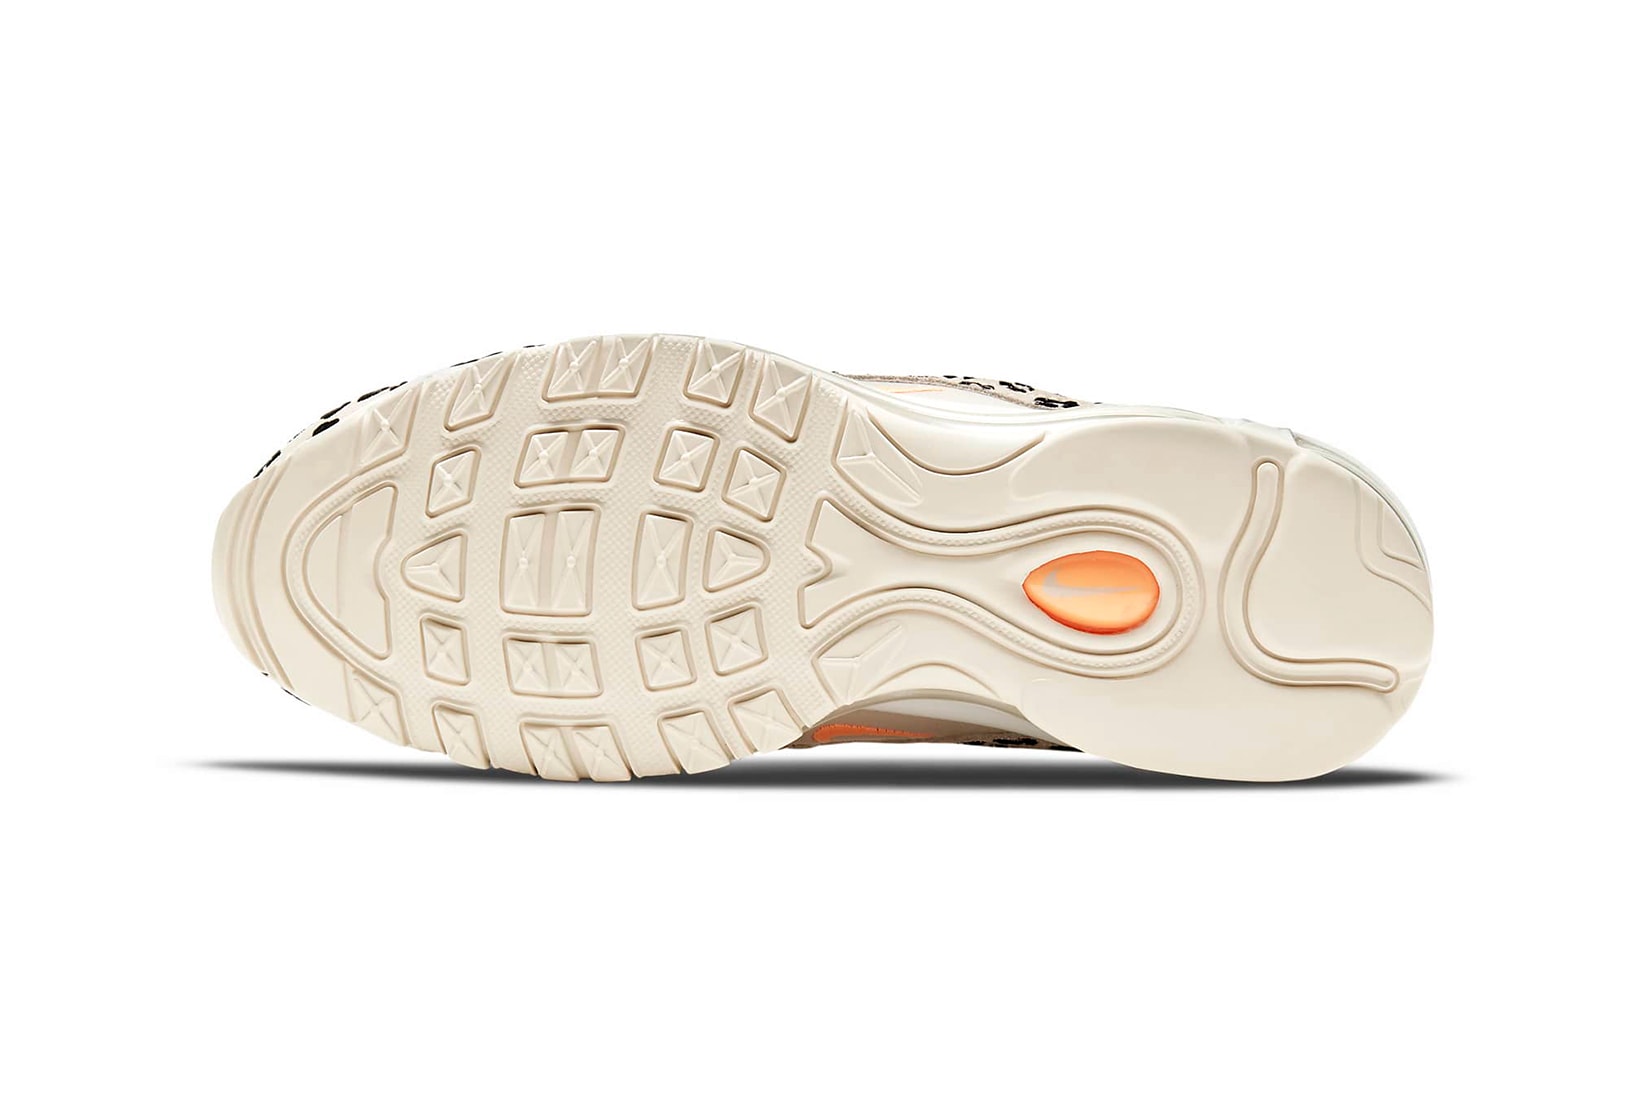 nike air max 97 am97 se womens sneakers cheetah print beige white orange colorway kicks footwear shoes sneakerhead outsole